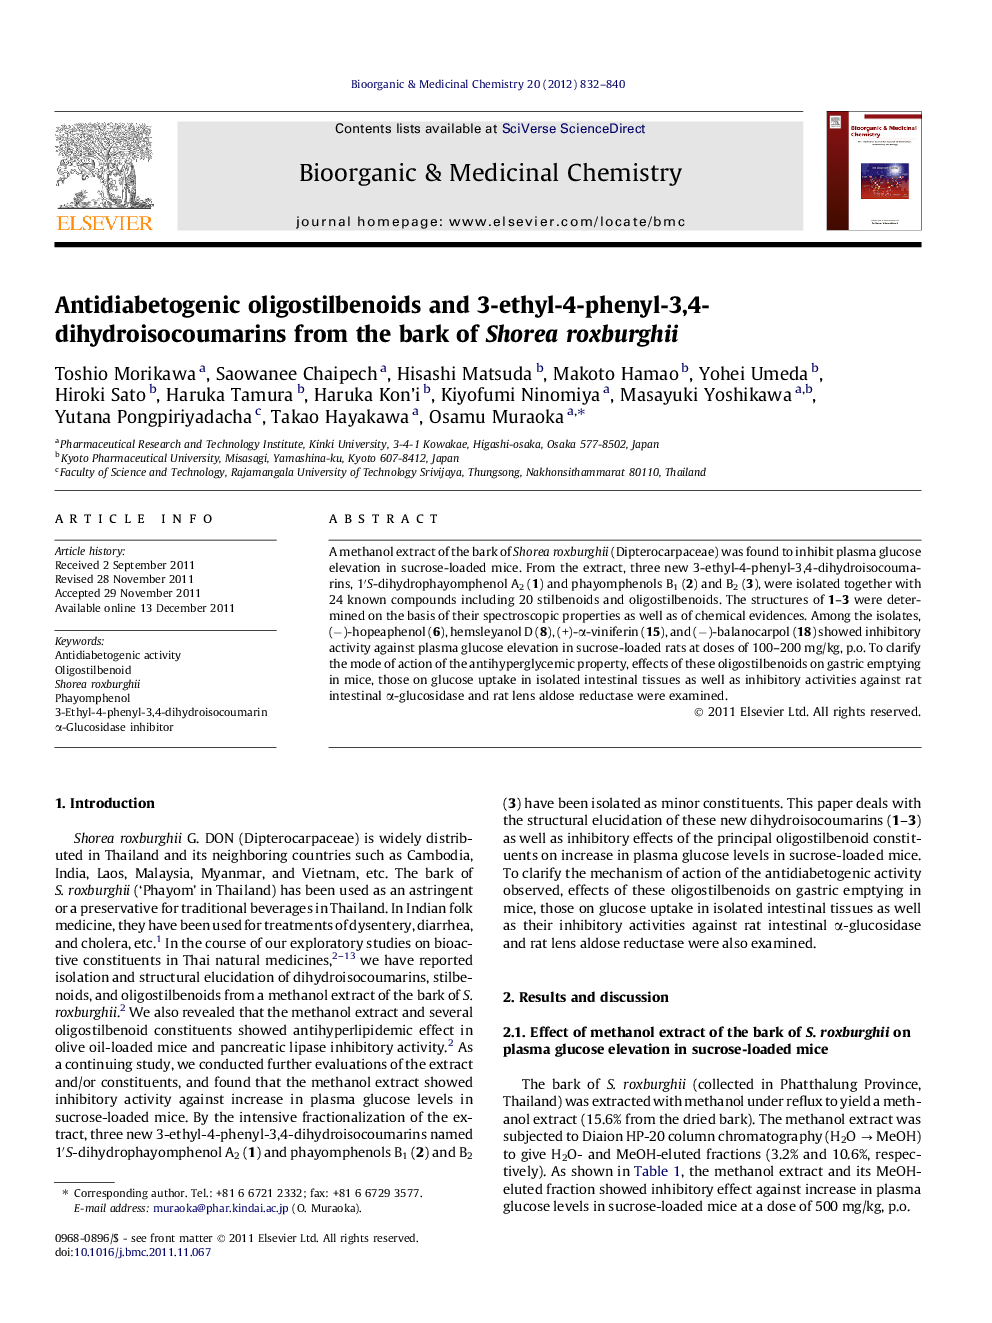 Antidiabetogenic oligostilbenoids and 3-ethyl-4-phenyl-3,4-dihydroisocoumarins from the bark of Shorea roxburghii